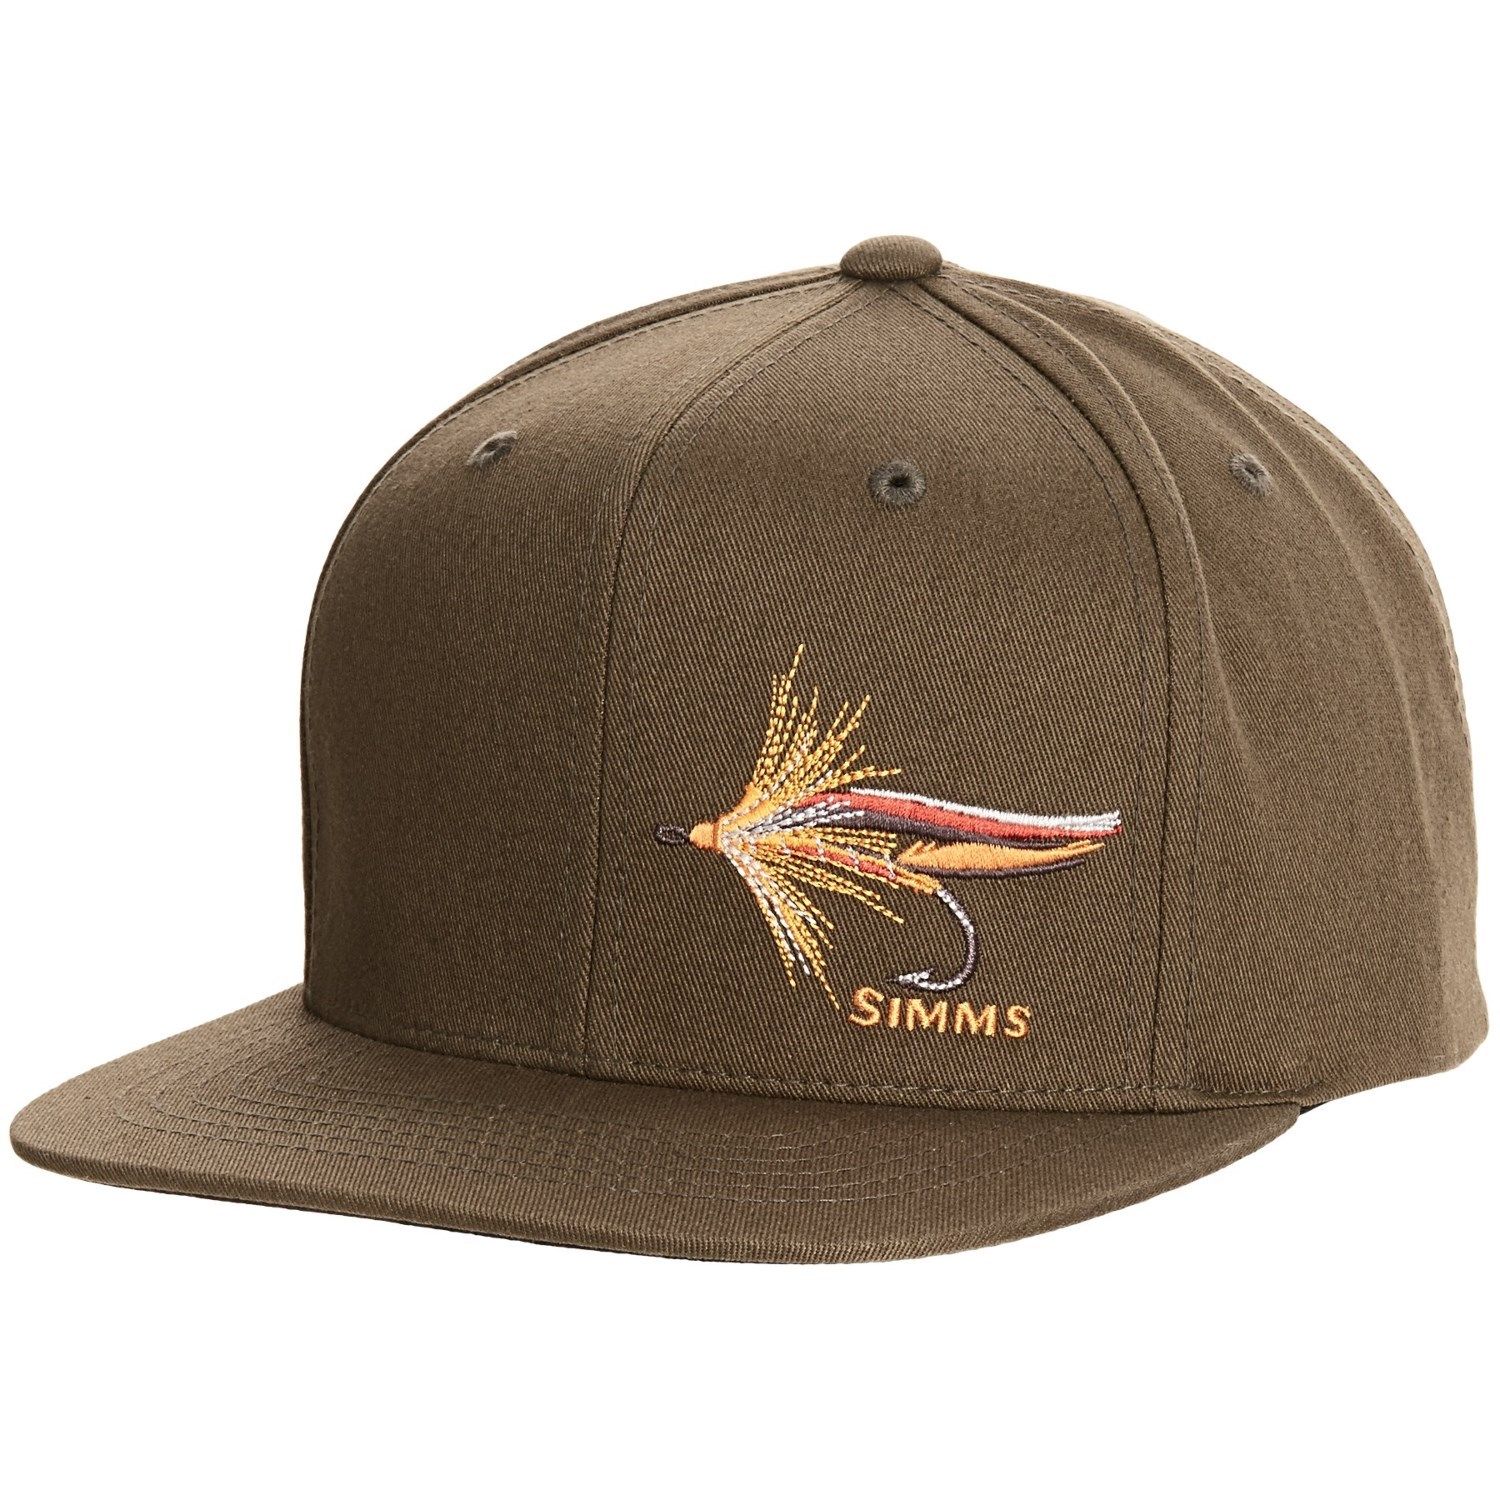 Simms Fly Fishing Twill Flat Brim Snapback Hat Cap Loden Color ...